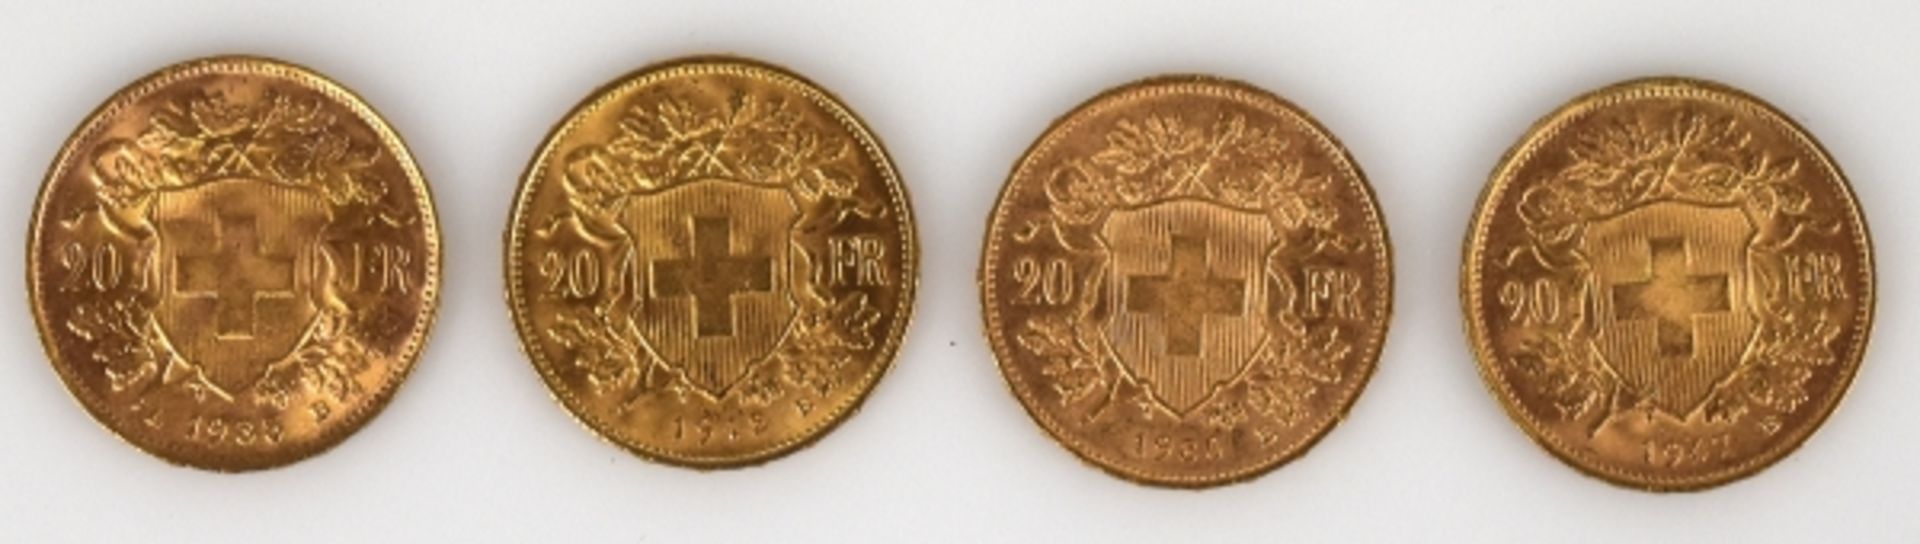 4 GOLDMÜNZEN 20Fr. (Vreneli), Schweiz, 1912, 1935, 1947, 1930, gesamt 25,79g